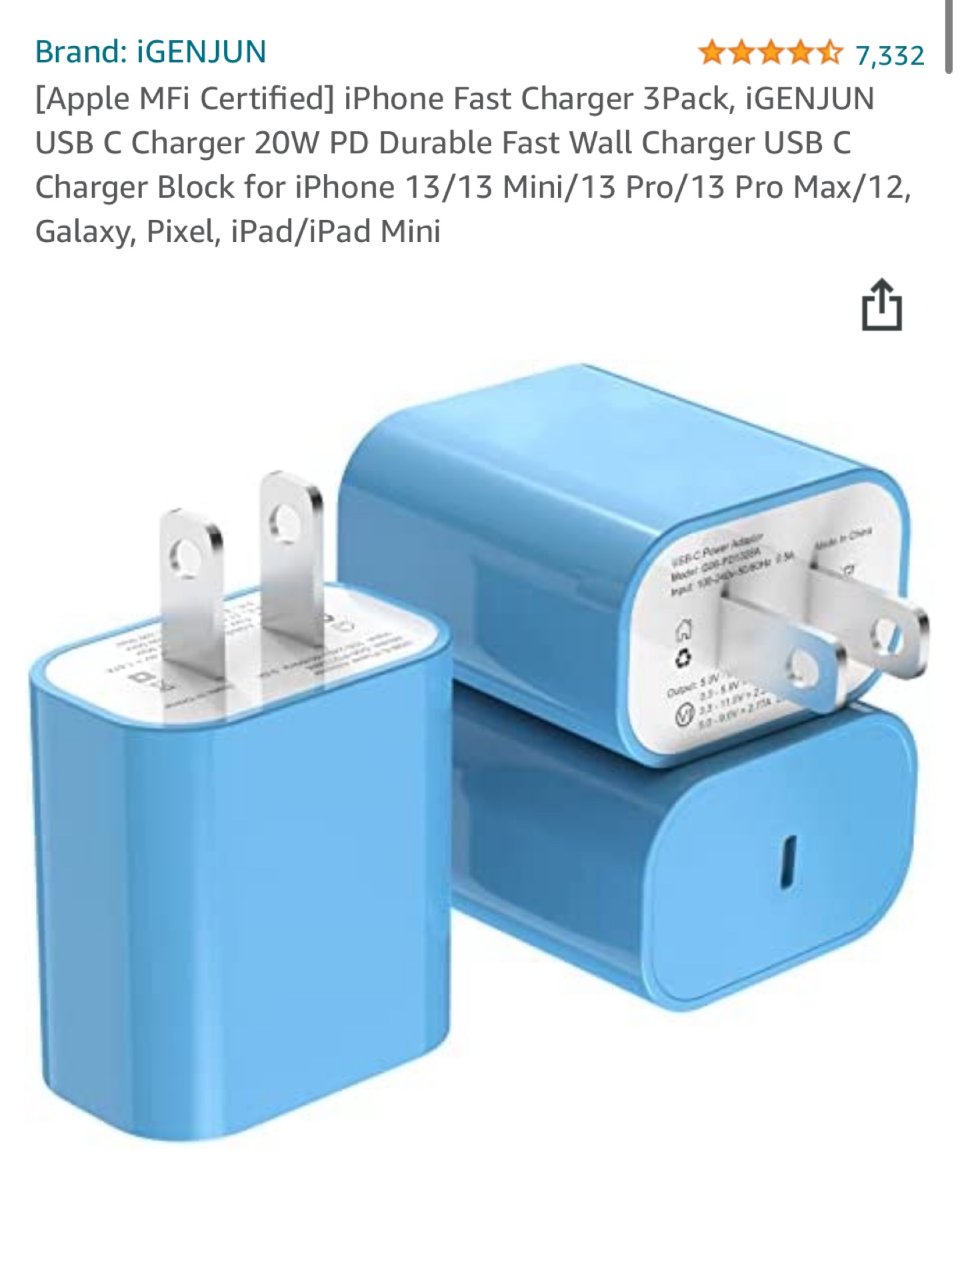 [Apple MFi Certified] iPhone Fast Charger 3Pack, iGENJUN USB C Charger 20W PD Durable Fast Wall Charger USB C Charger Block for iPhone 13/13 Mini/13 Pro/13 Pro Max/12, Galaxy, Pixel, iPad/iPad Mini : Cell Phones & Accessories